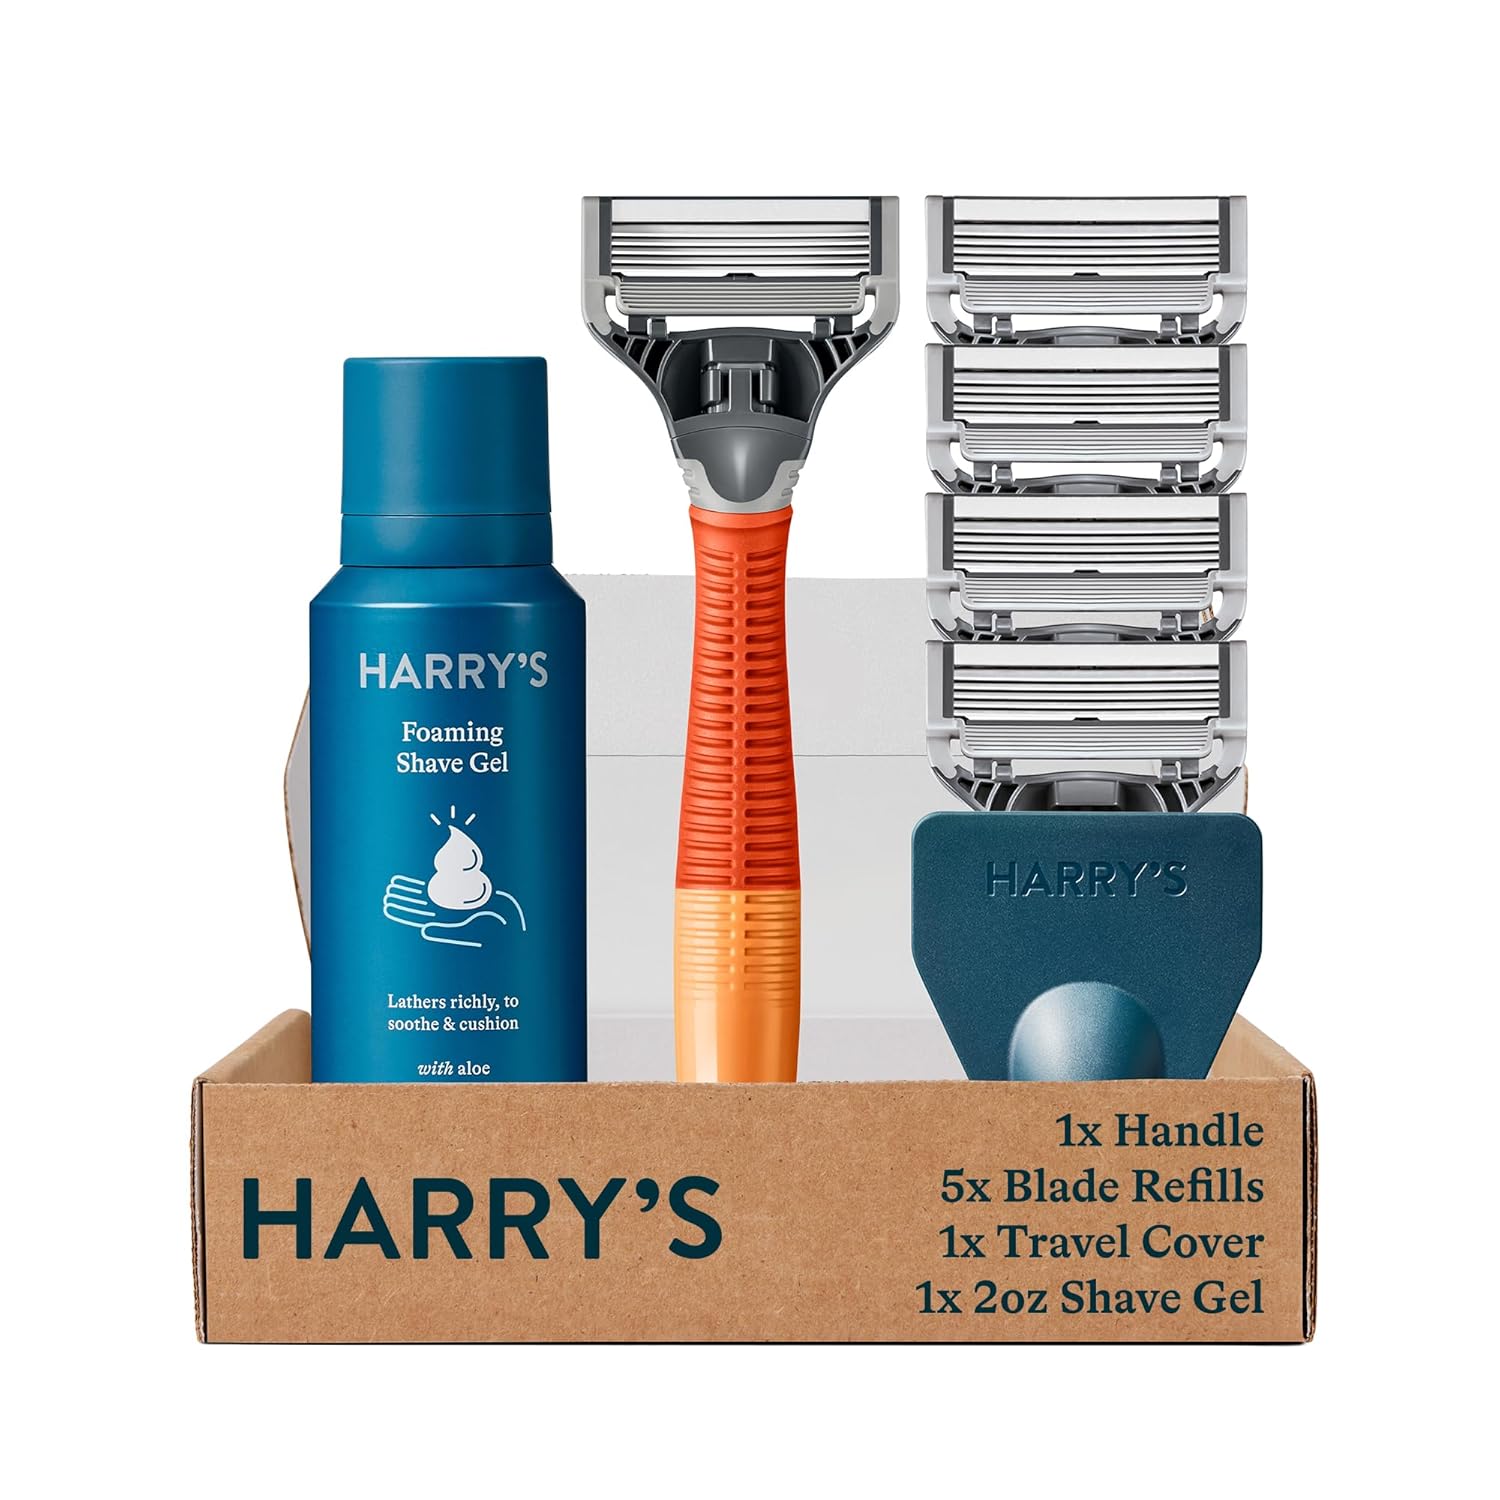 Harry's Razors for Men - Men's Razor Set with 5 Razor Blade Refills, Travel Blade Cover, 2 oz Shave Gel (Ember)